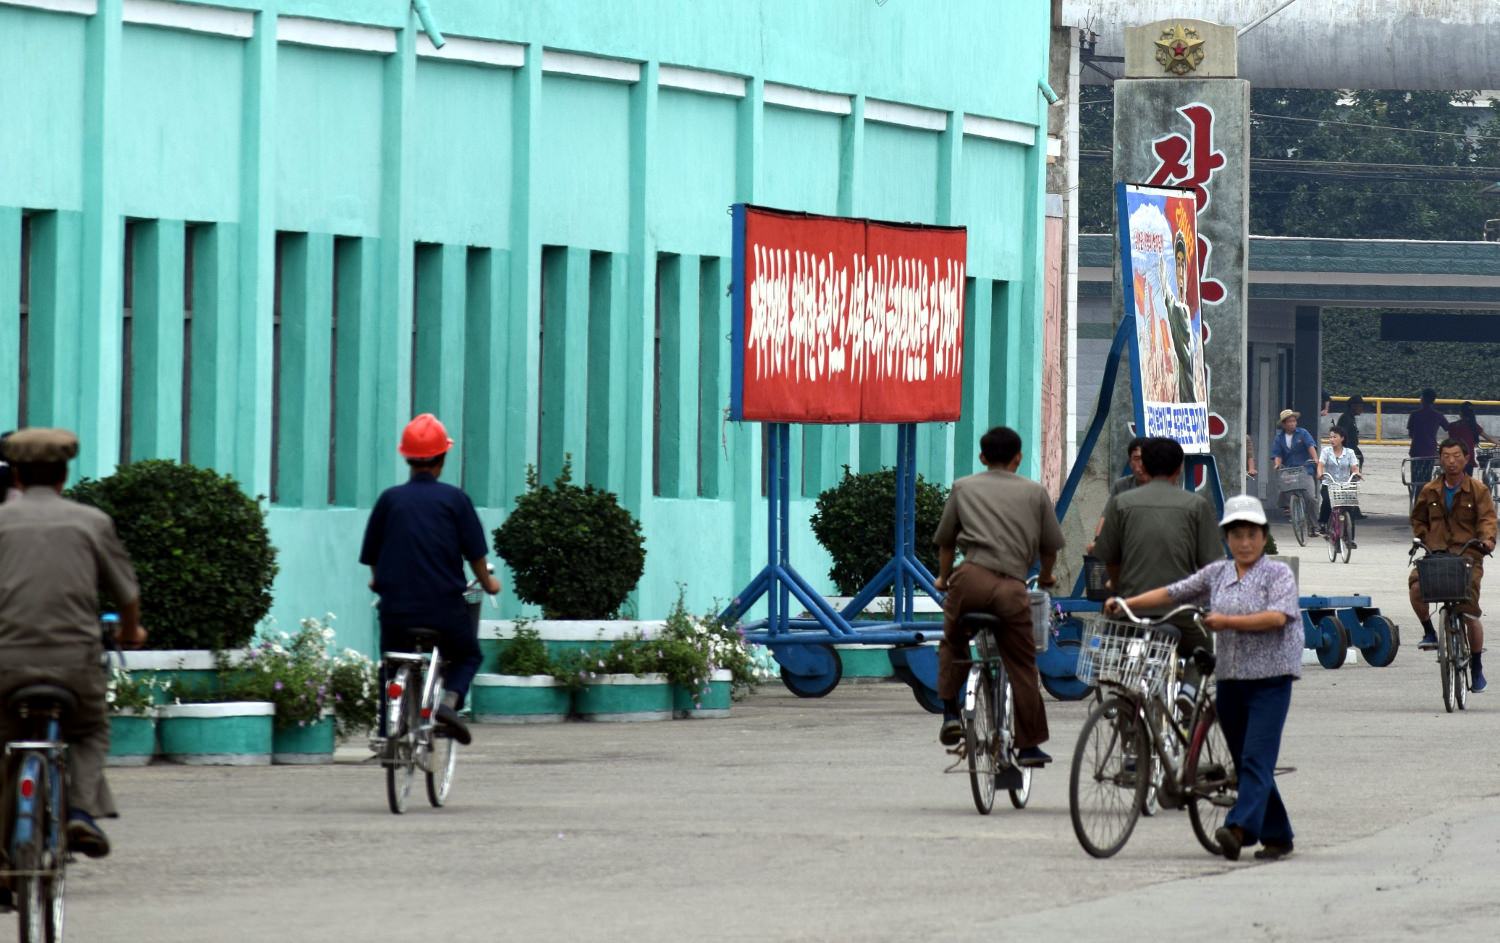 Entrance to the Hungnam Fertiliser factory in North Korea (DPRK)